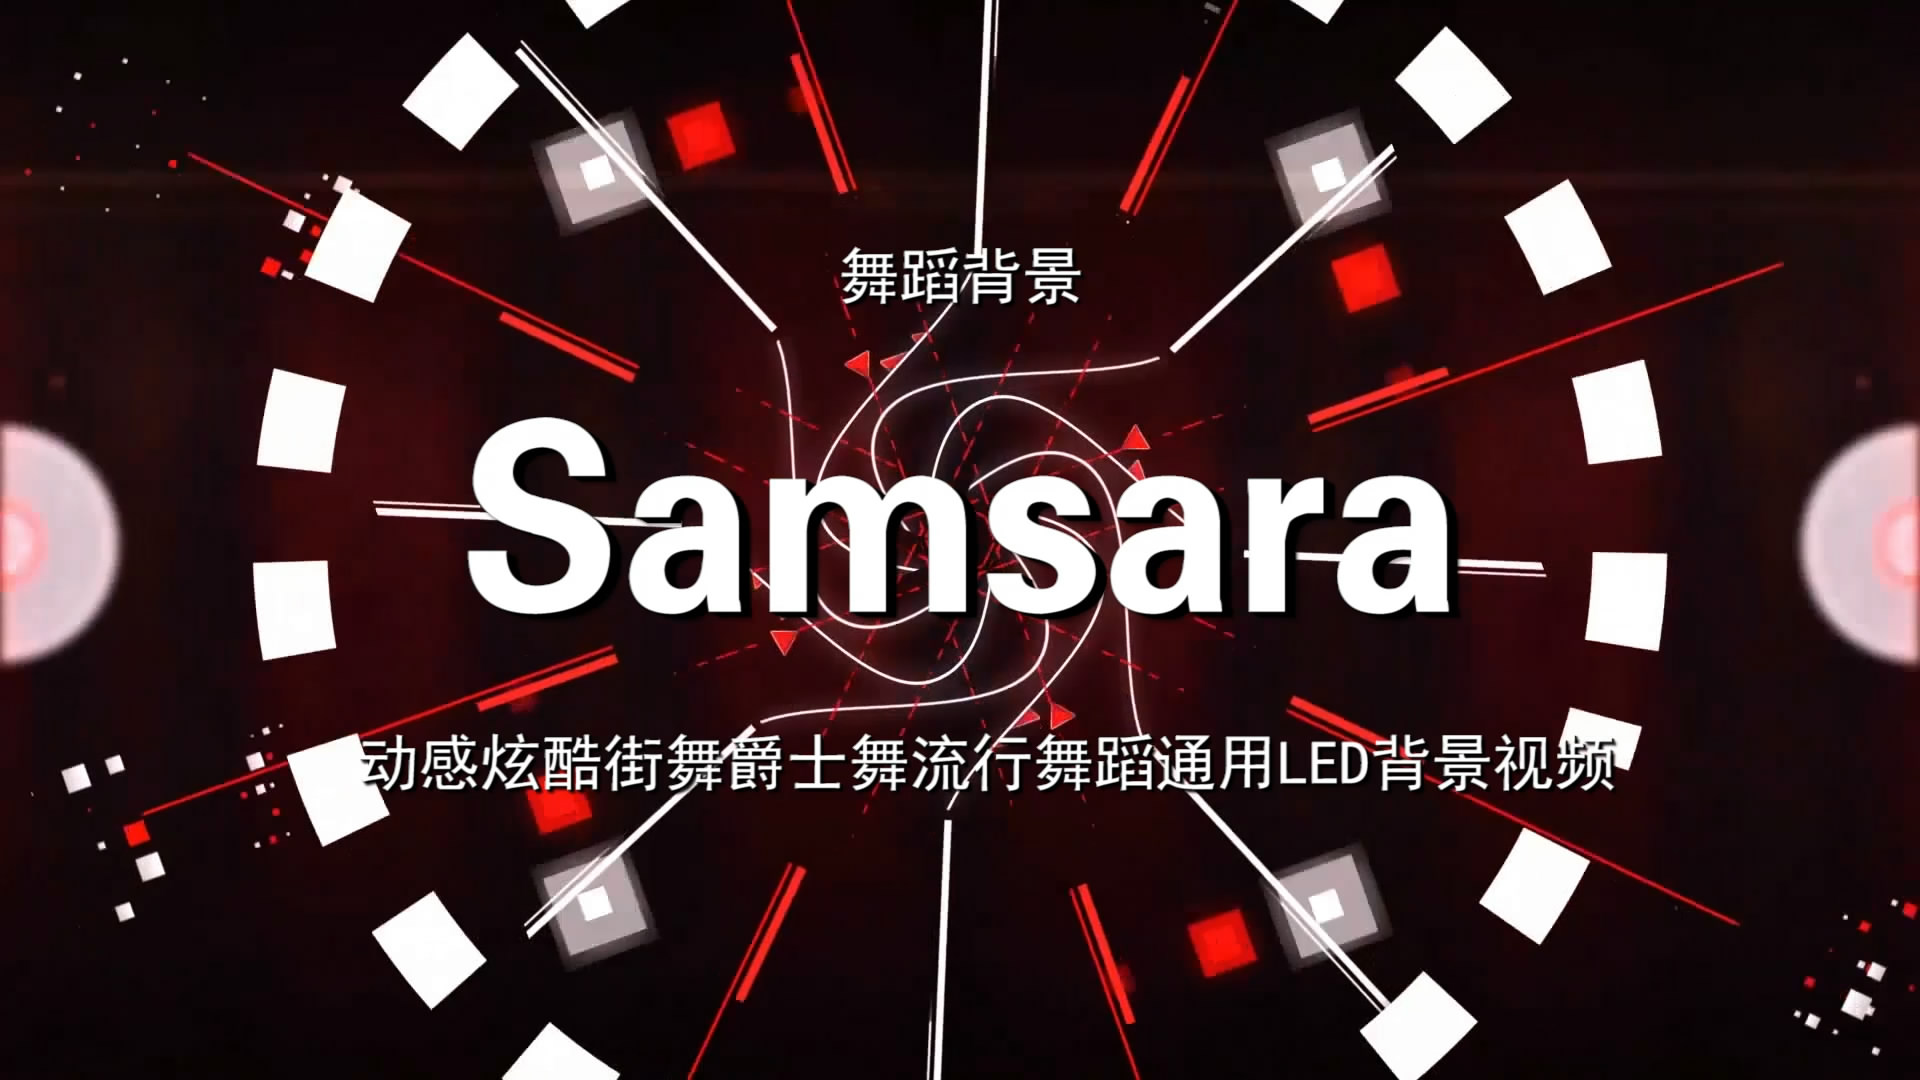 Samsara 动感炫酷街舞流行歌舞LED背景大屏幕视频素材TV